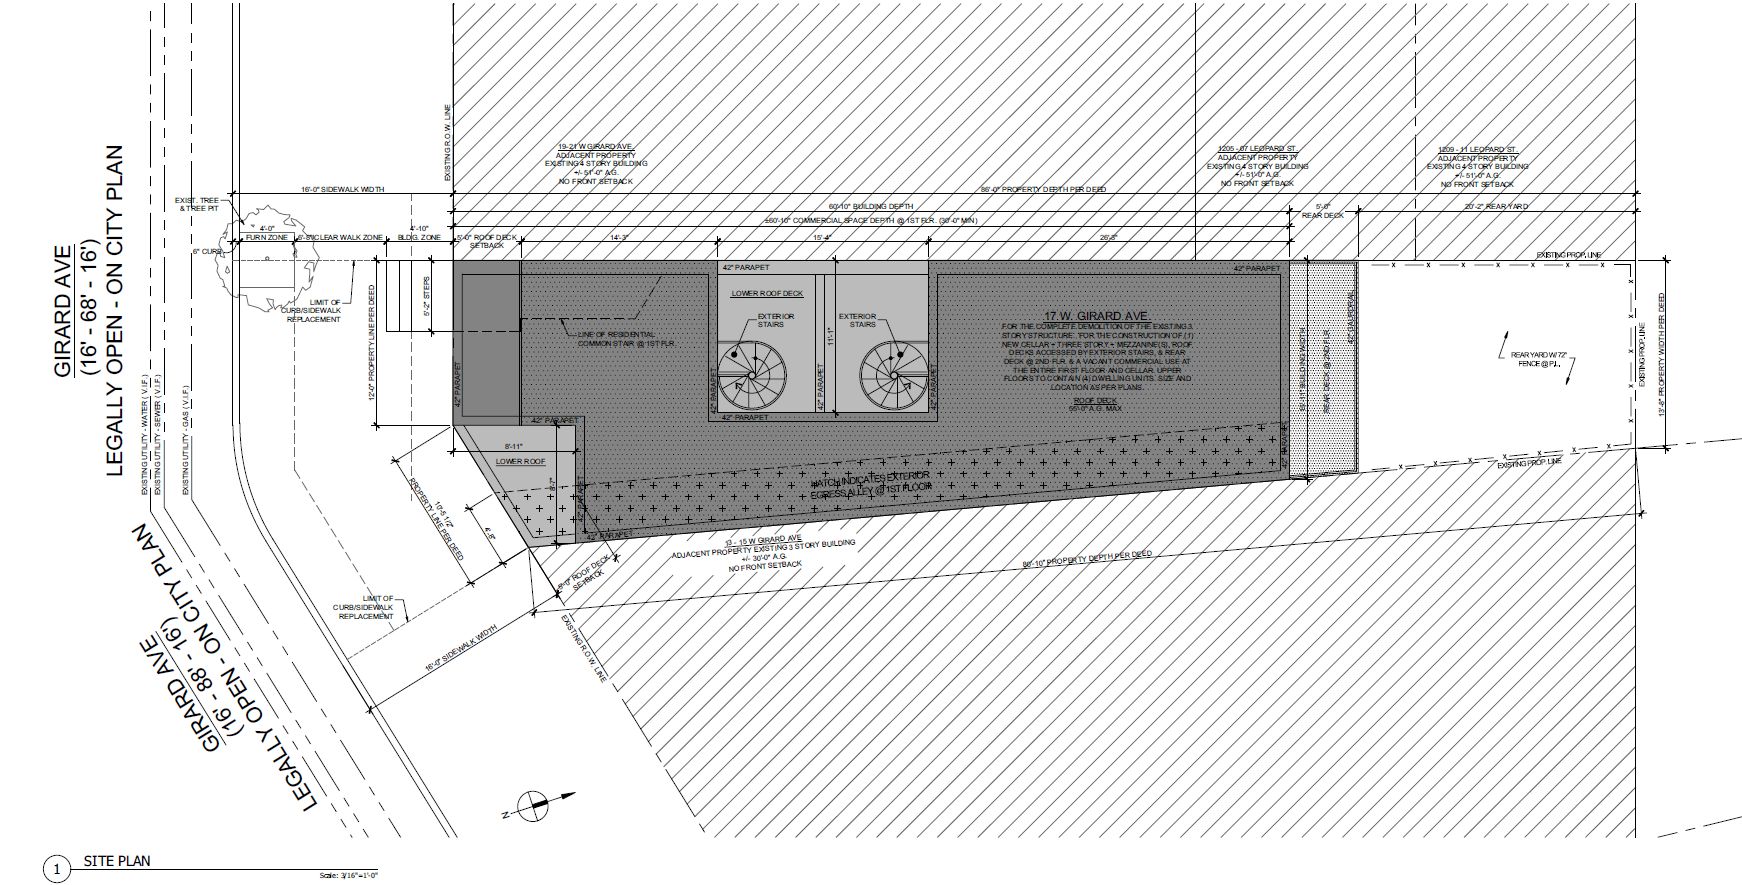 17 West Girard Street. Site plan. Credit: Gnome Architects via the City of Philadelphia